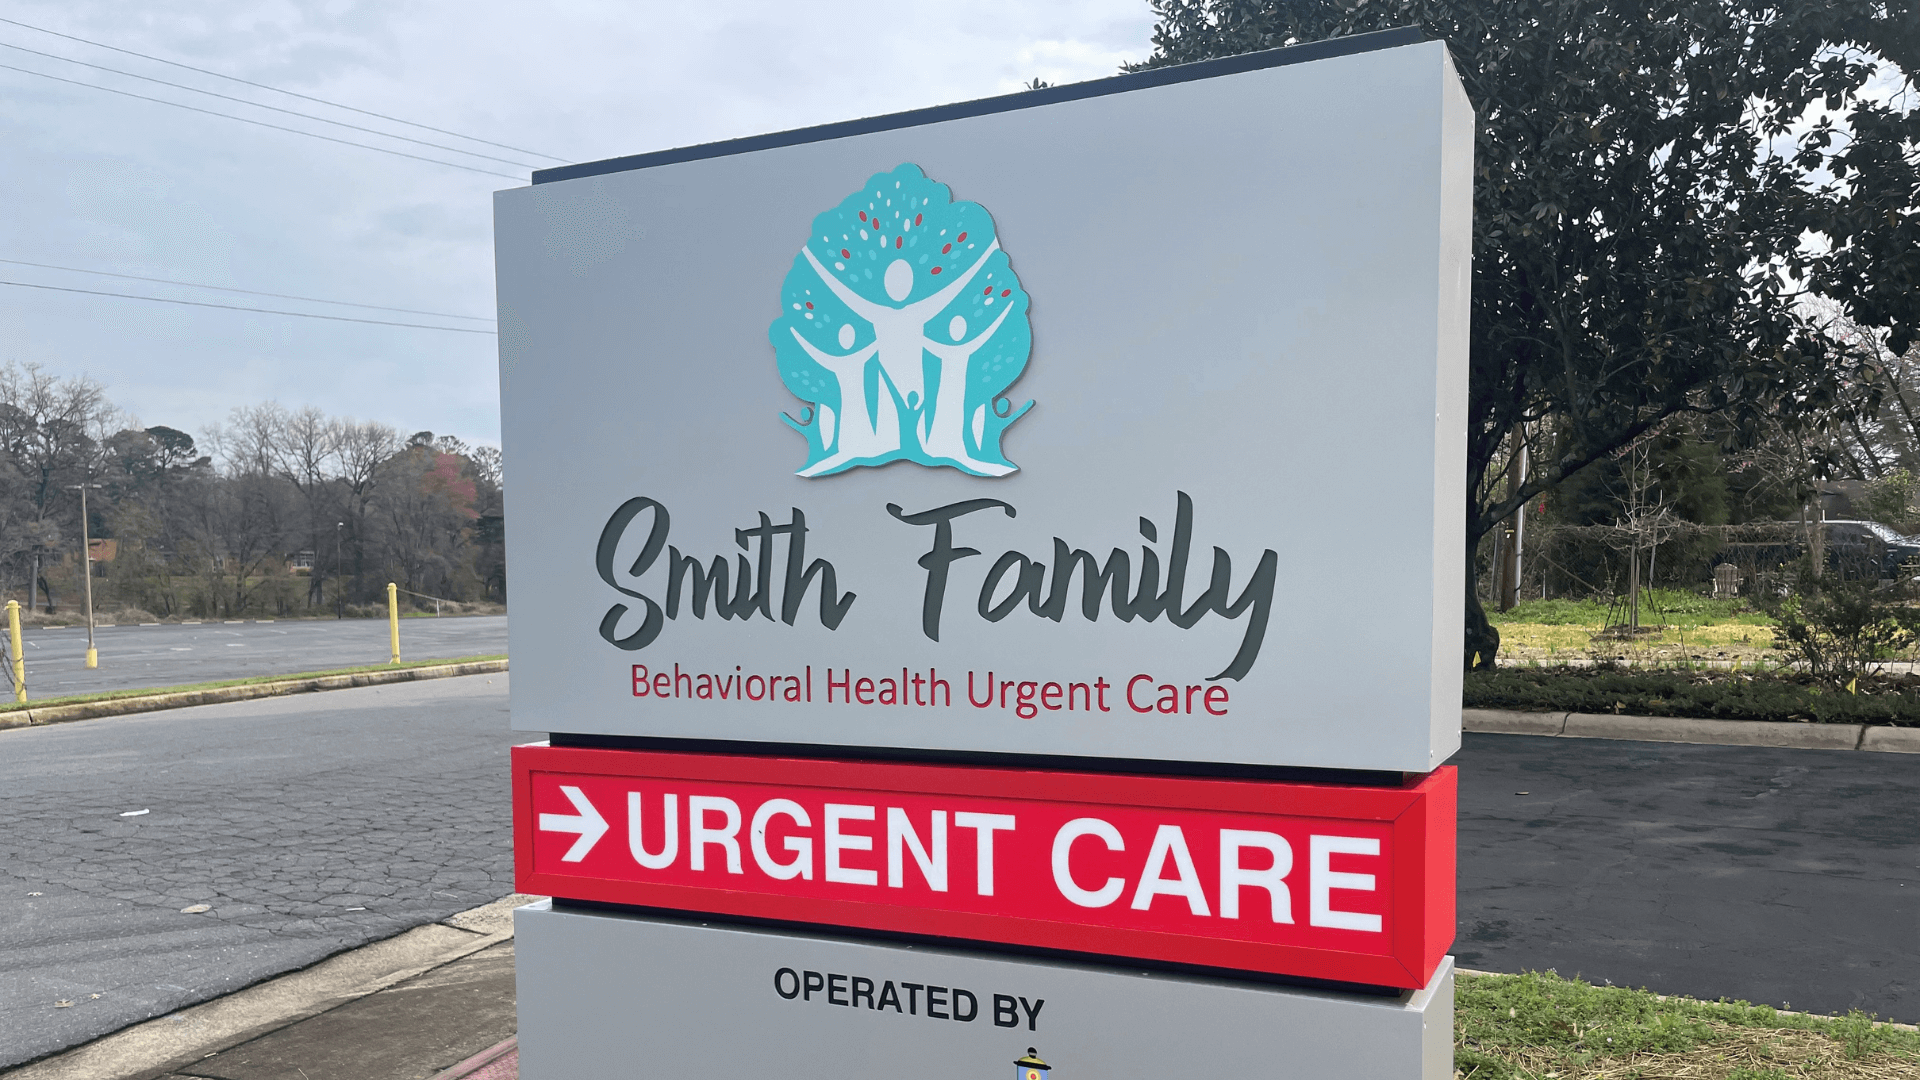 Smith Family Behavioral Health Urgent Care